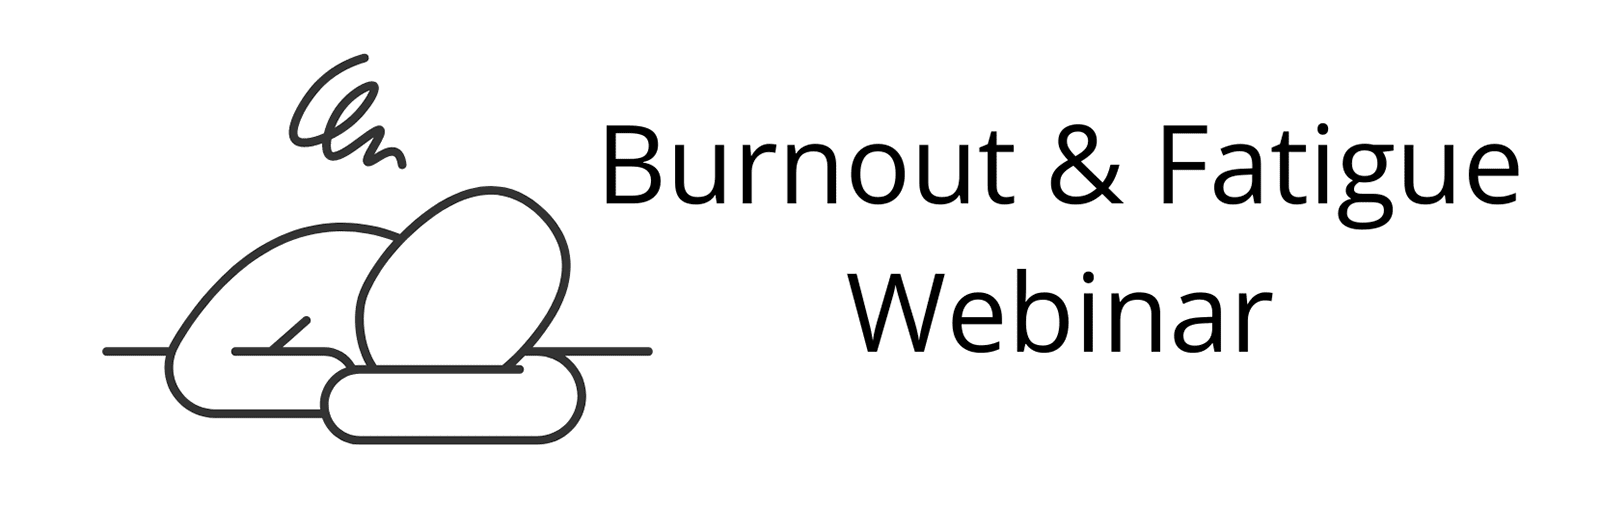 Burnout & Fatigue Webinar